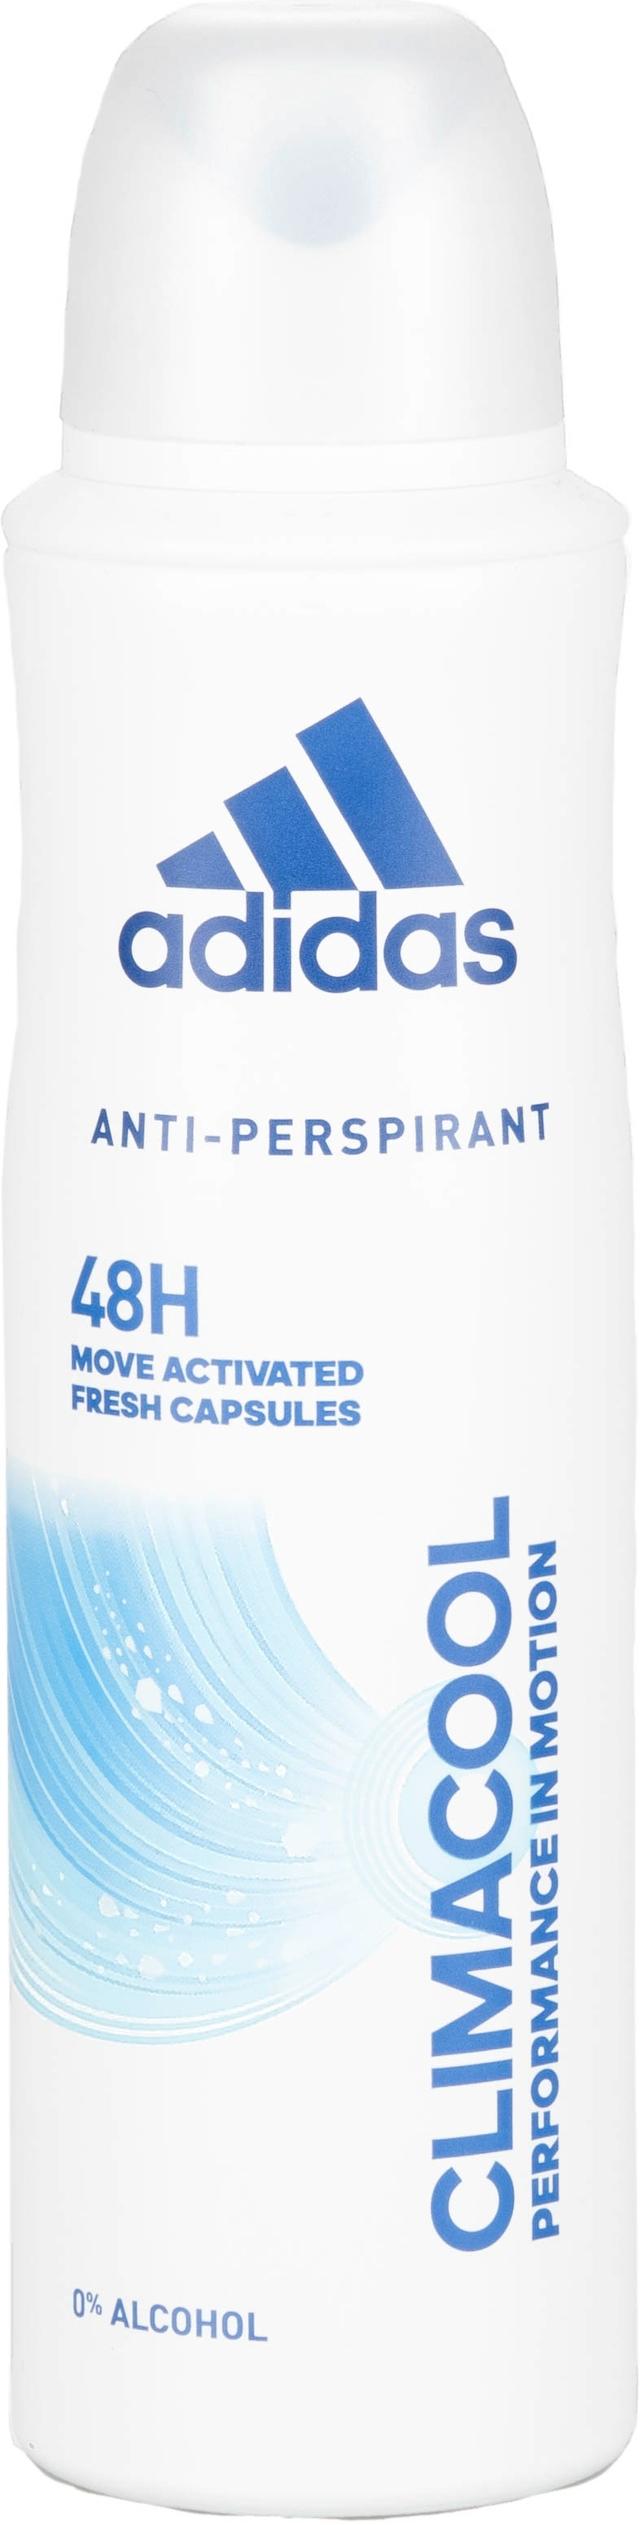 Adidas Climacool 48h Antiperspirantti Spray Naisille 150ml